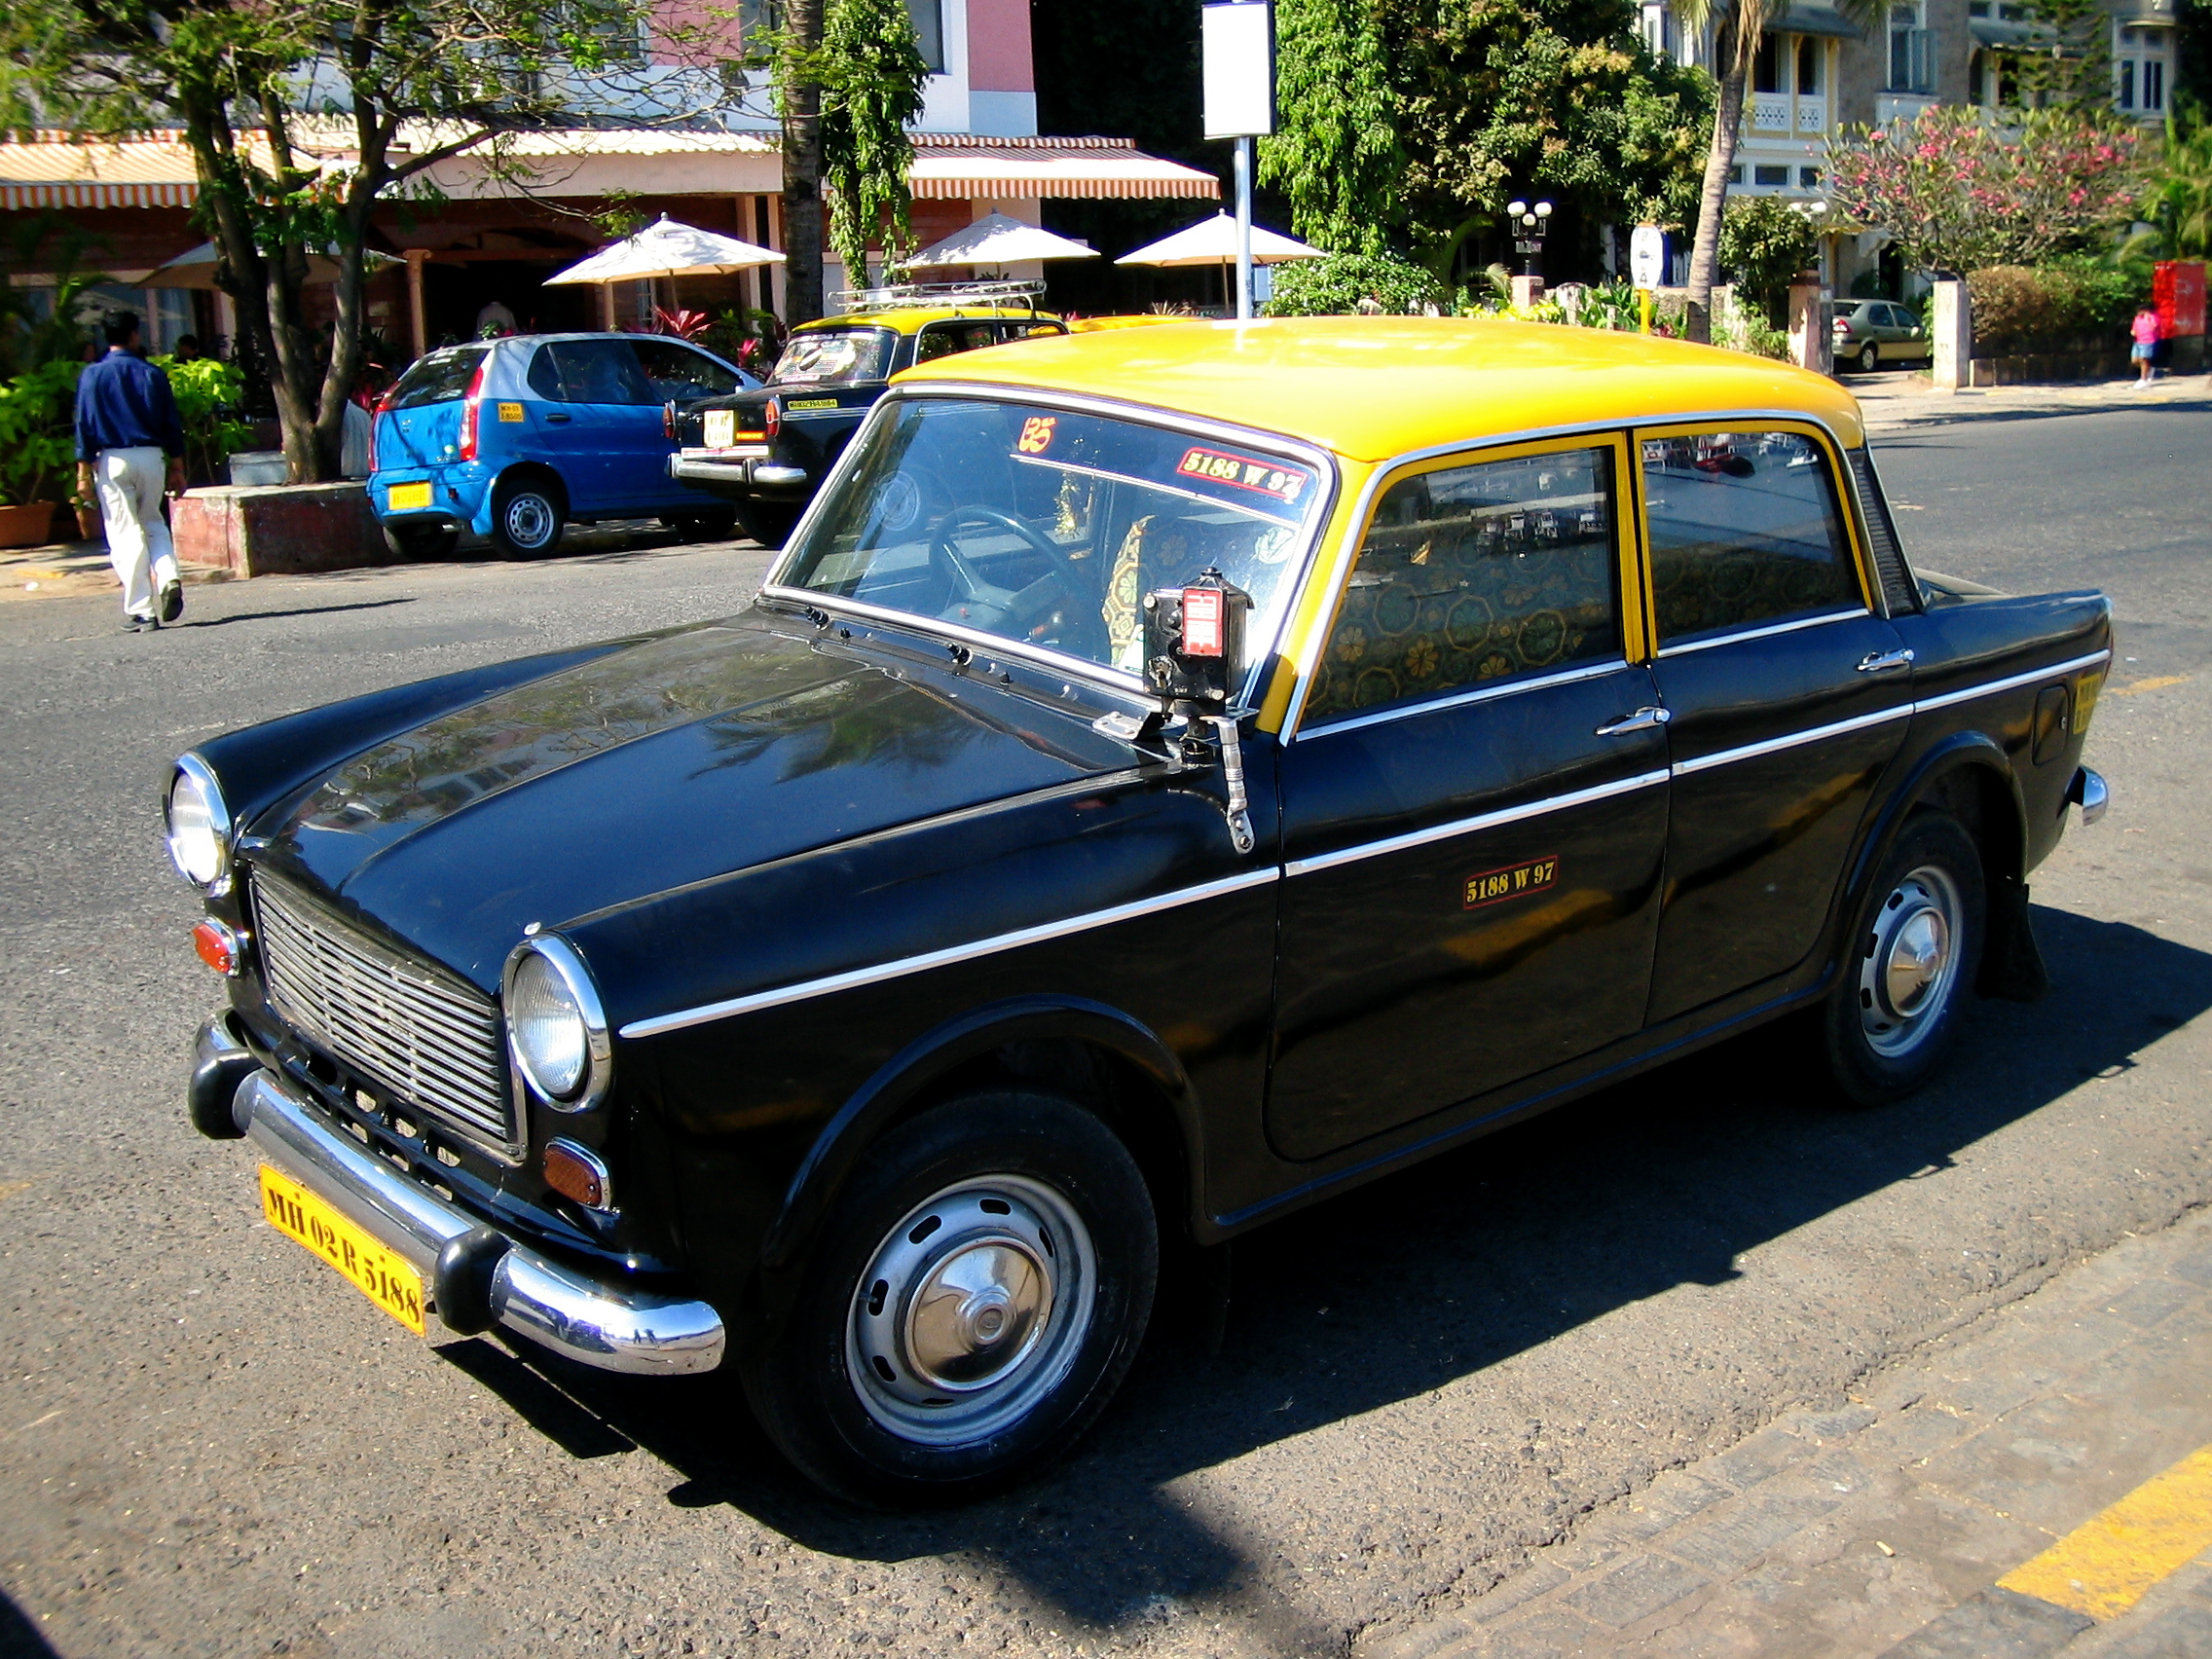 Bombay "Ambassador" Taxi